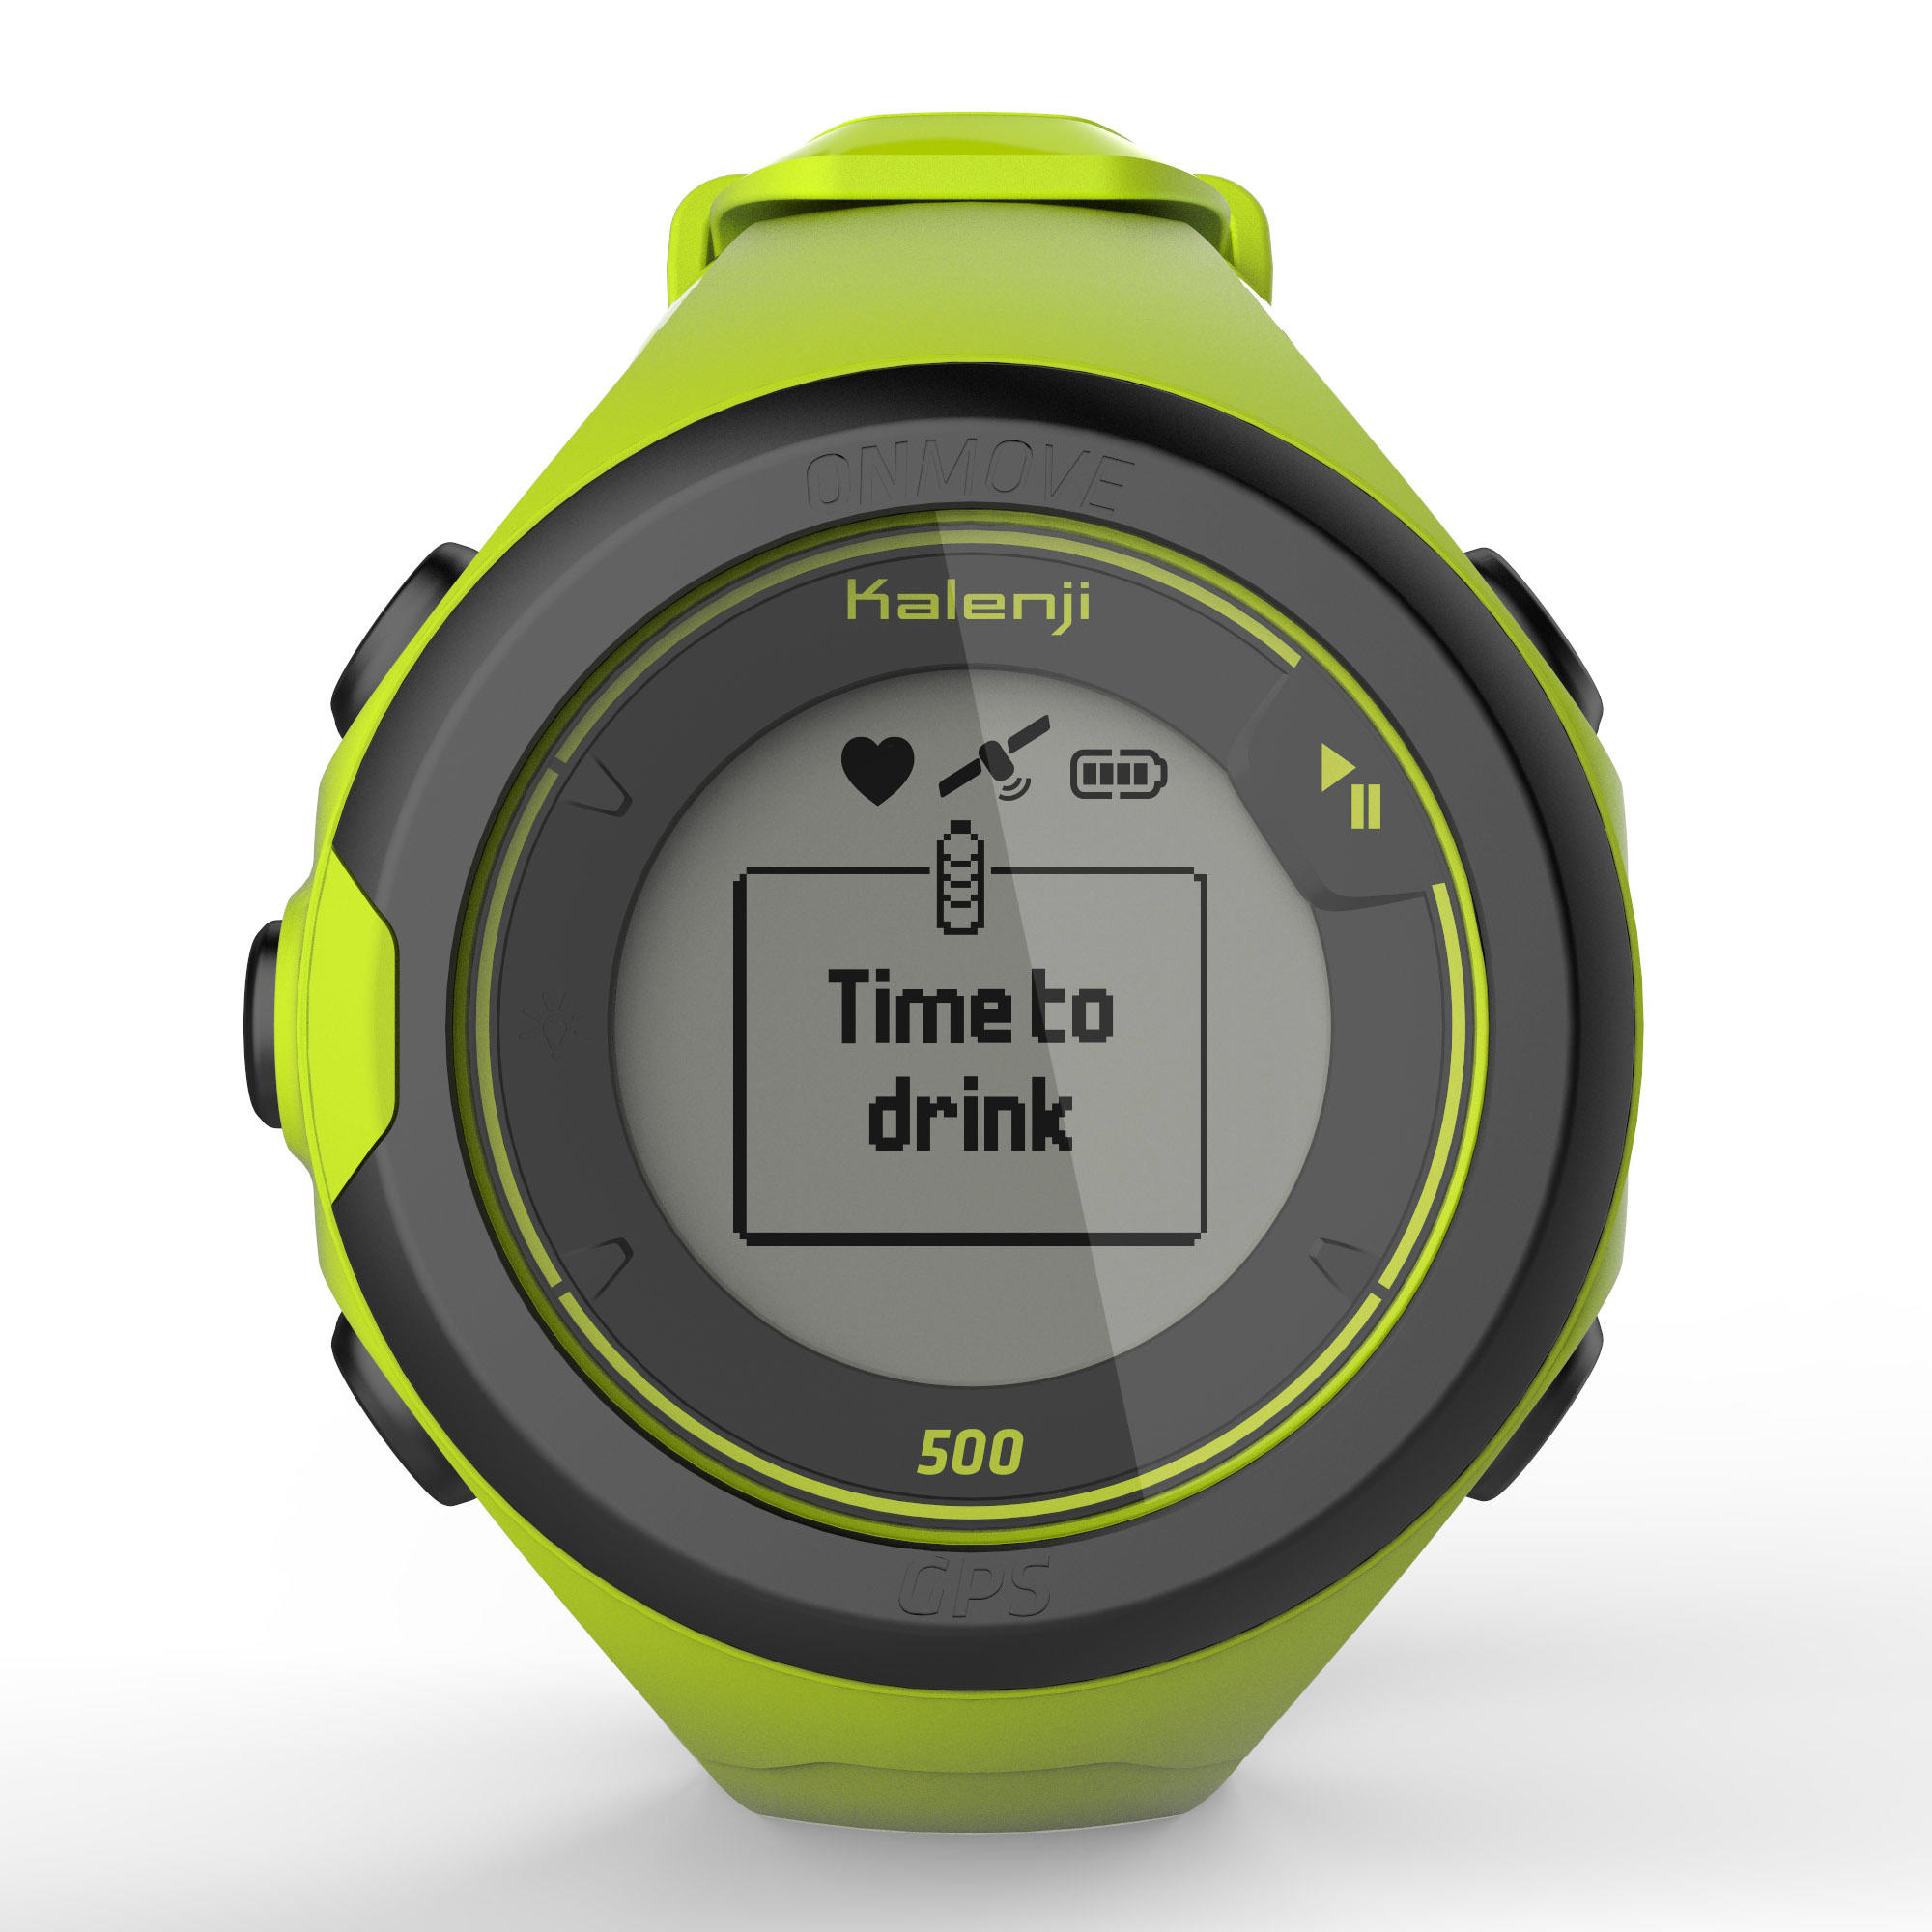 ONmove 500 GPS running watch and wrist heart rate monitor - yellow 10/17